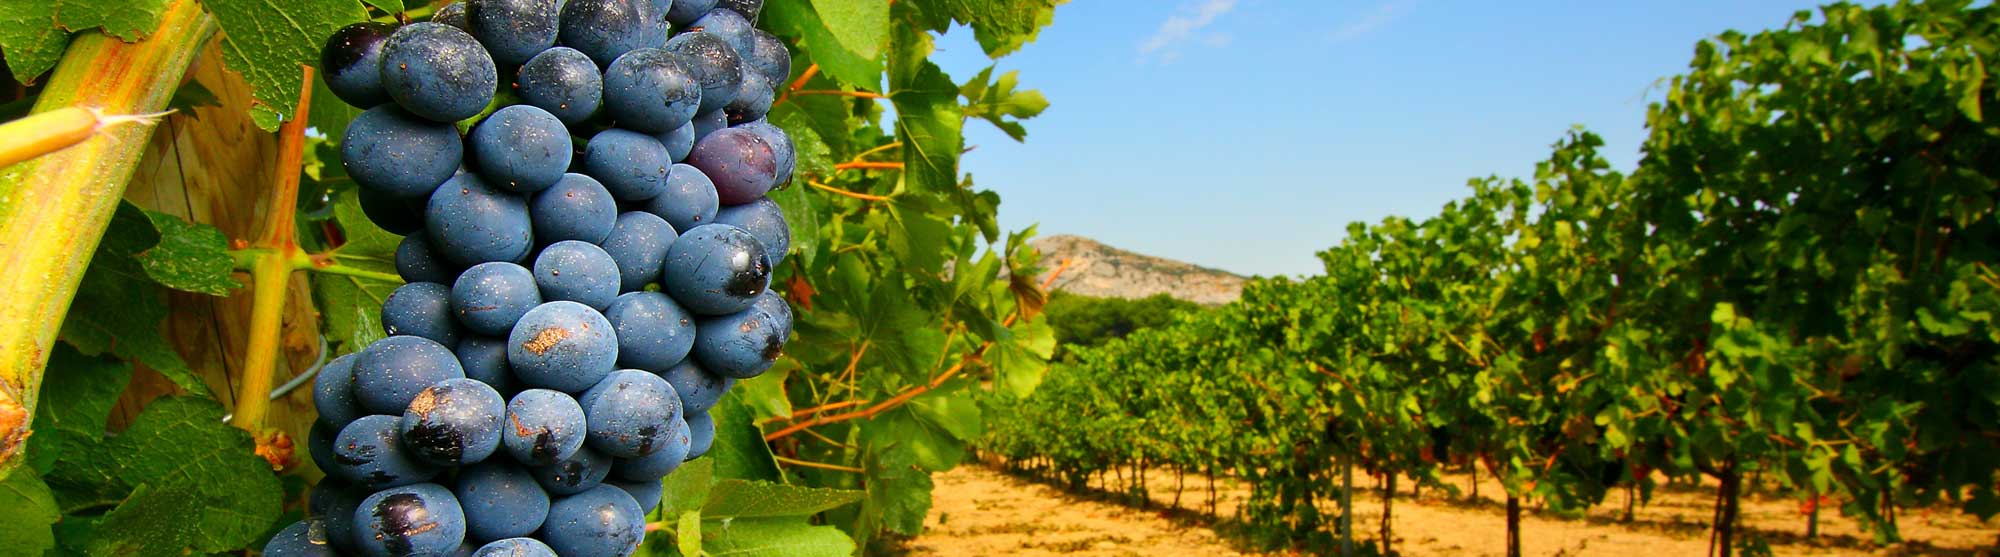 vigne vins pays catahre